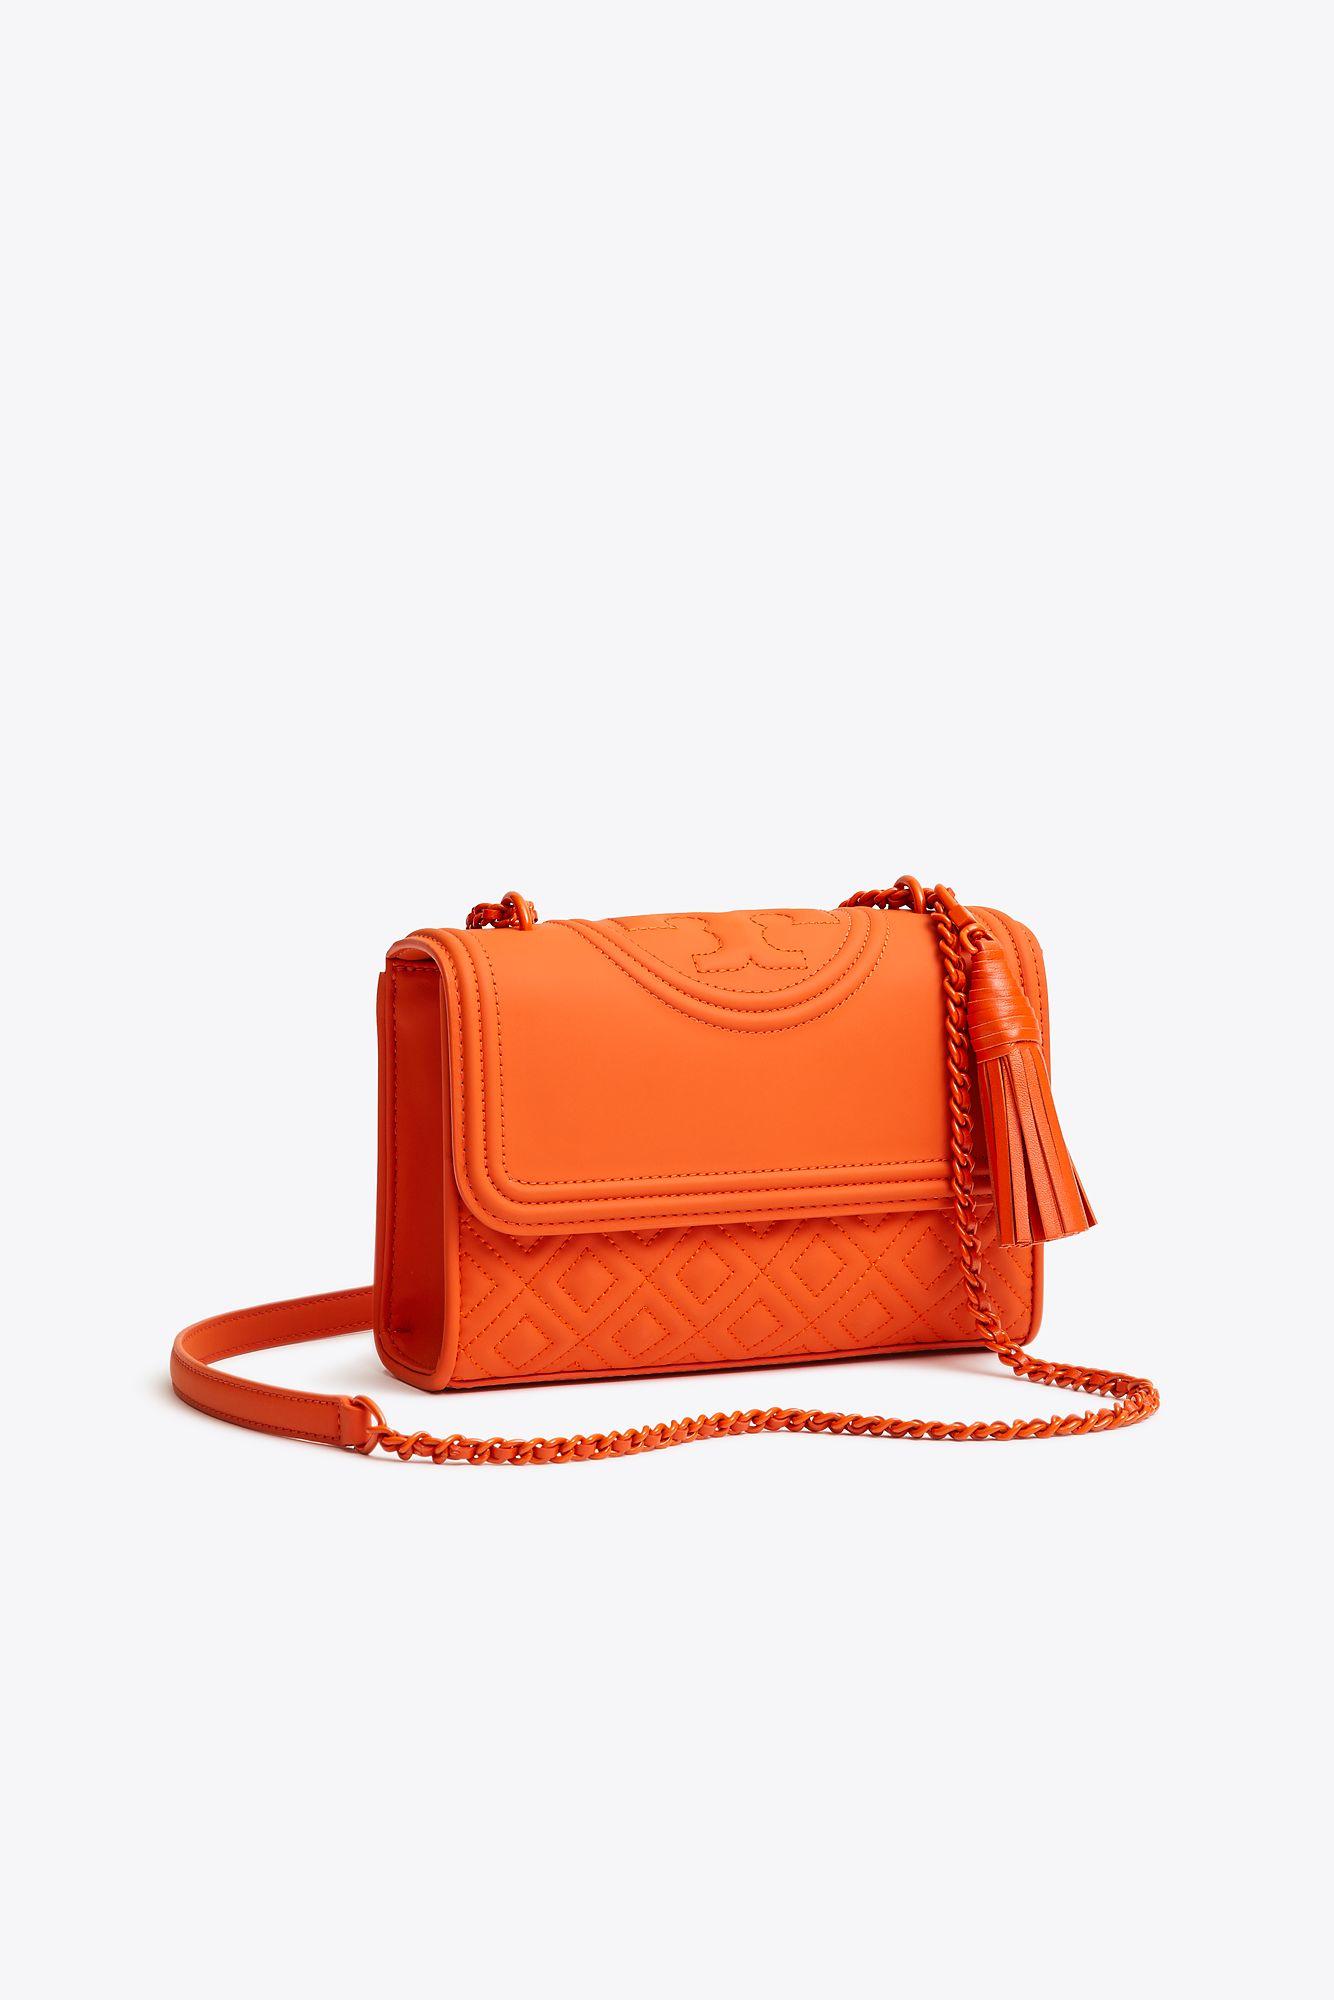 Tory Burch Fleming Matte Small Convertible Shoulder Bag in Orange | Lyst